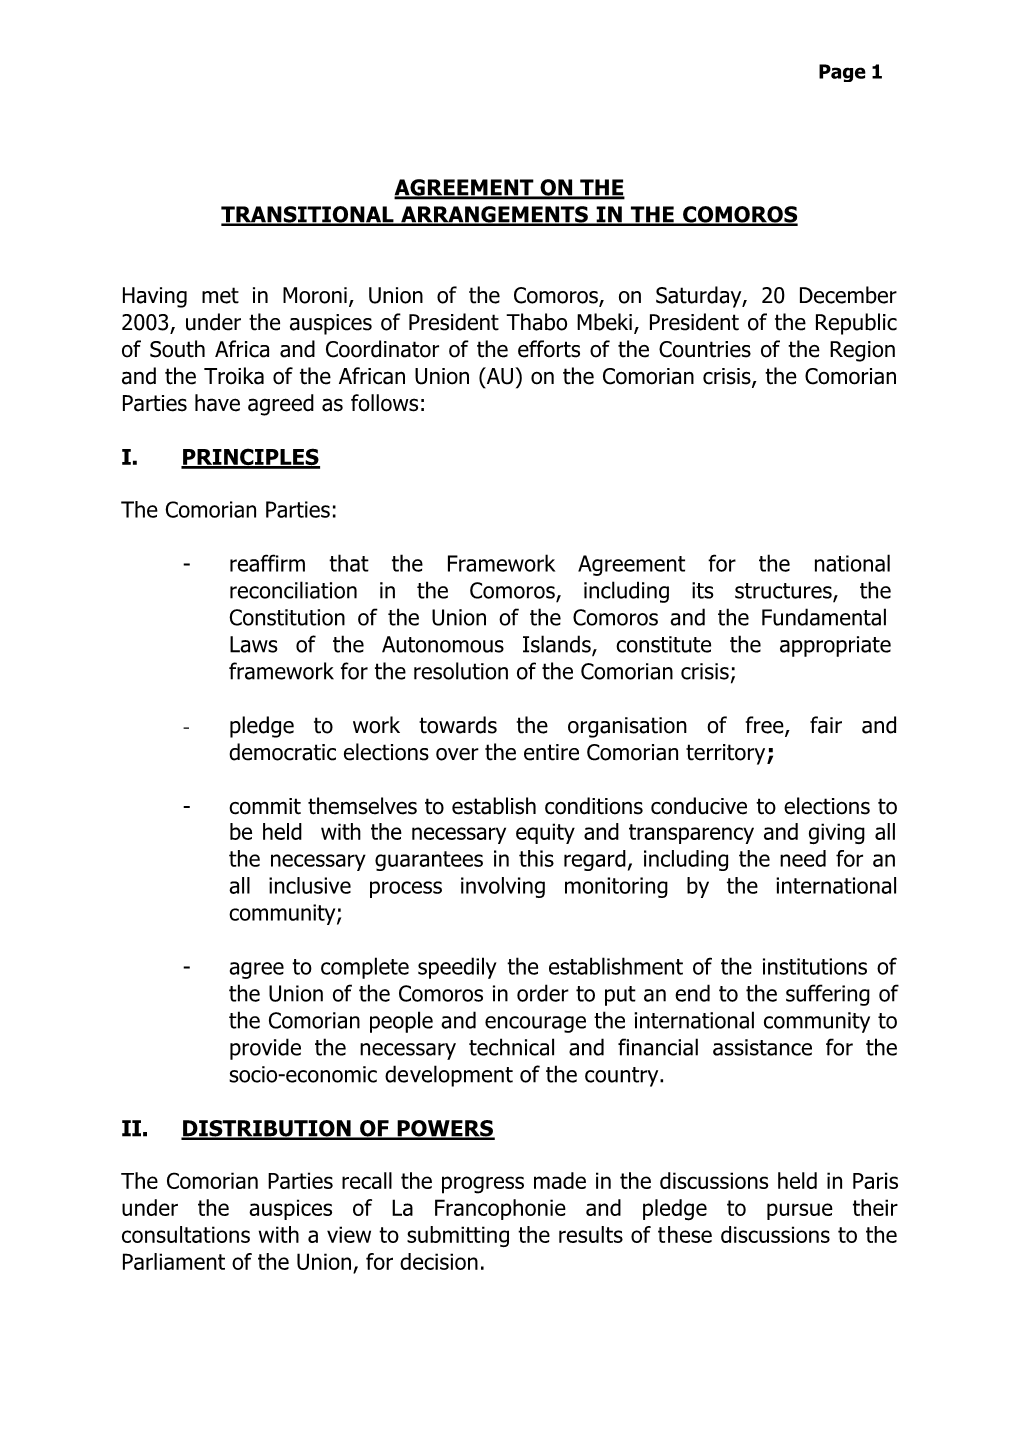 Agreement Comoros 20 Dec.03 1